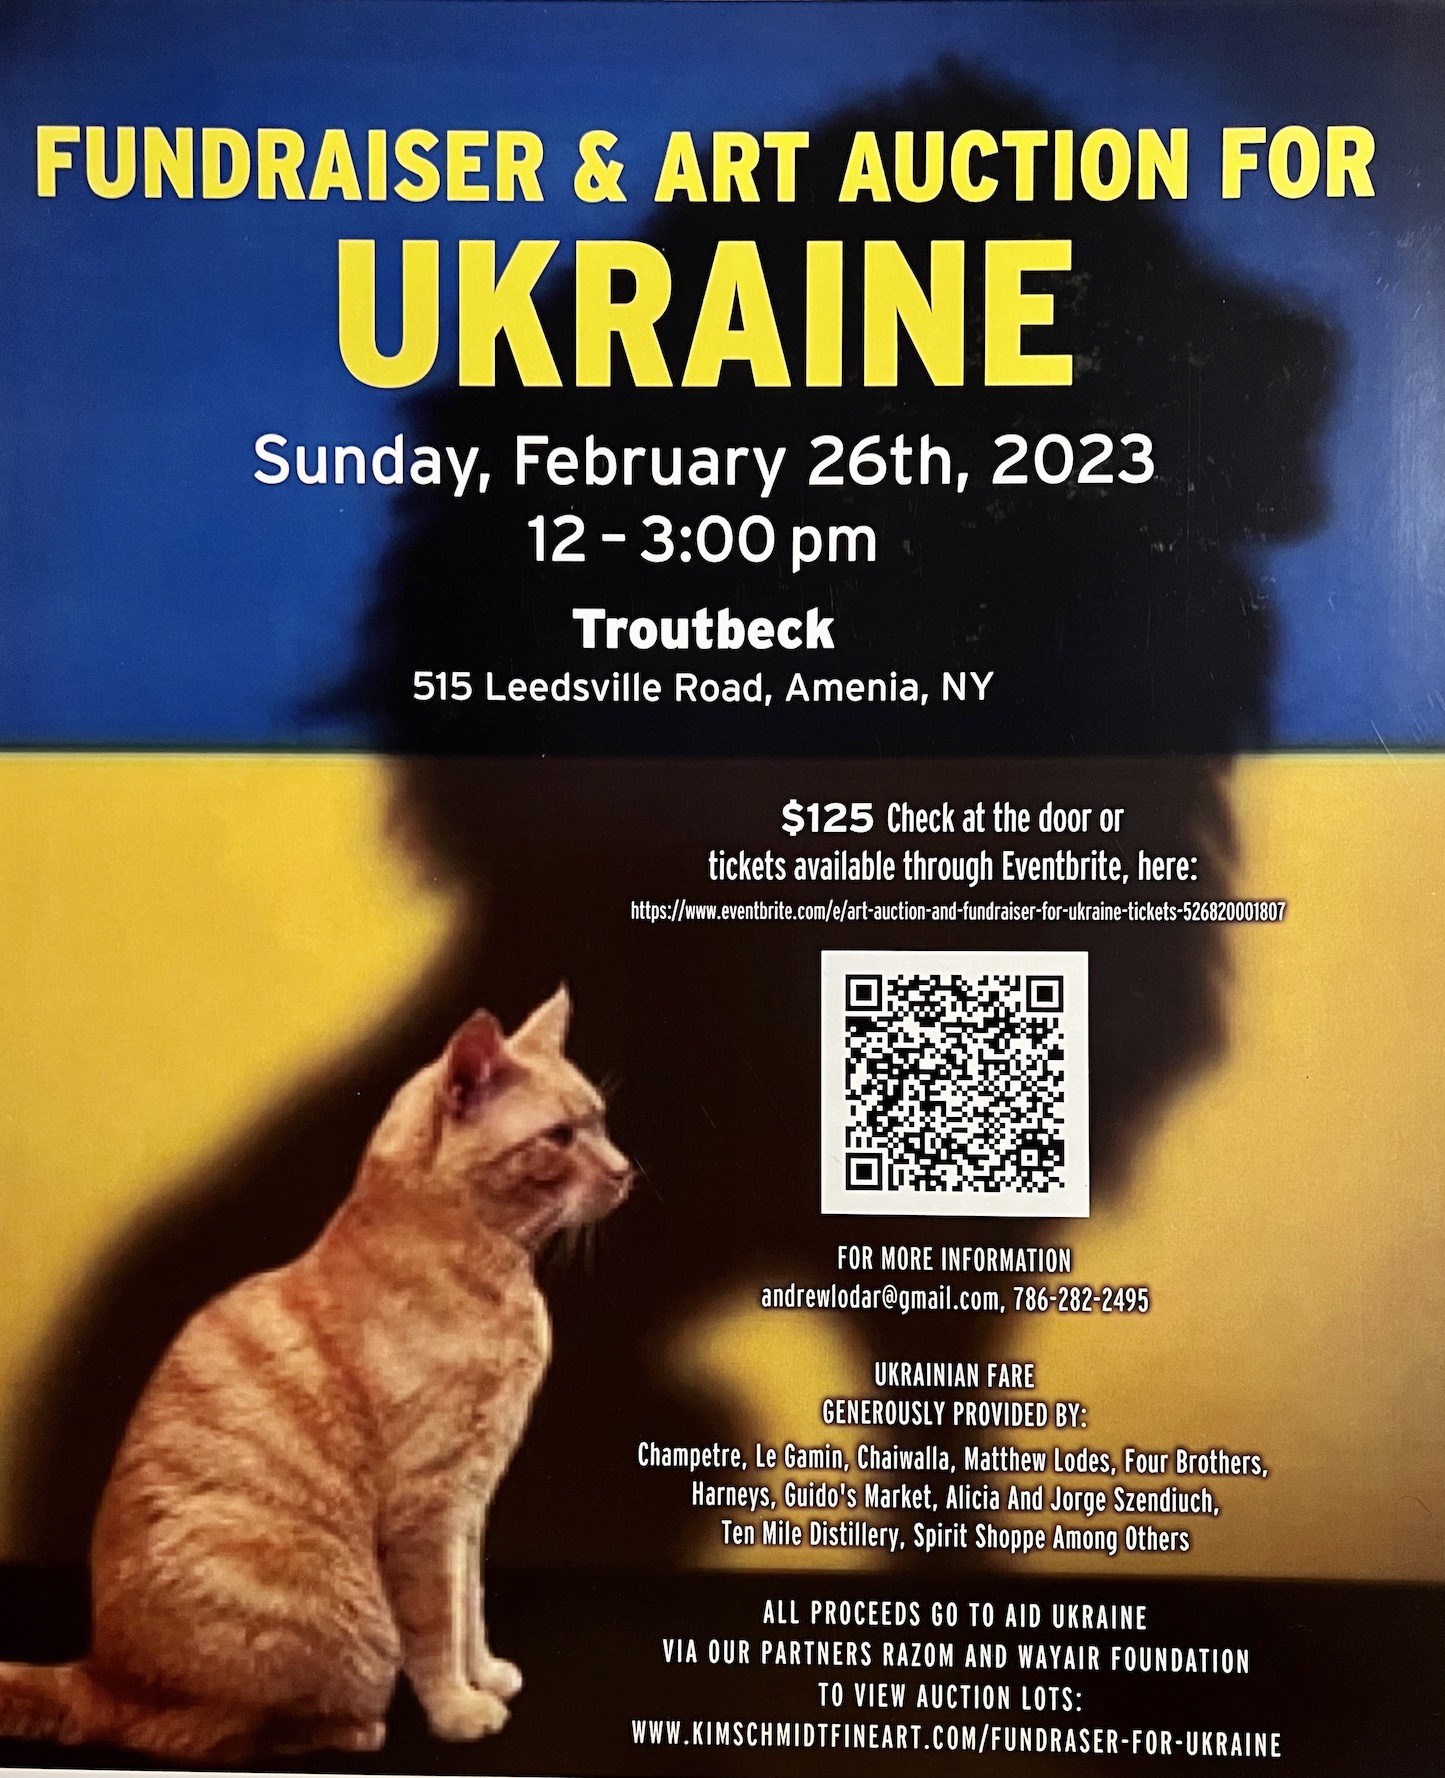 Art Auction and Fundraiser for Ukraine